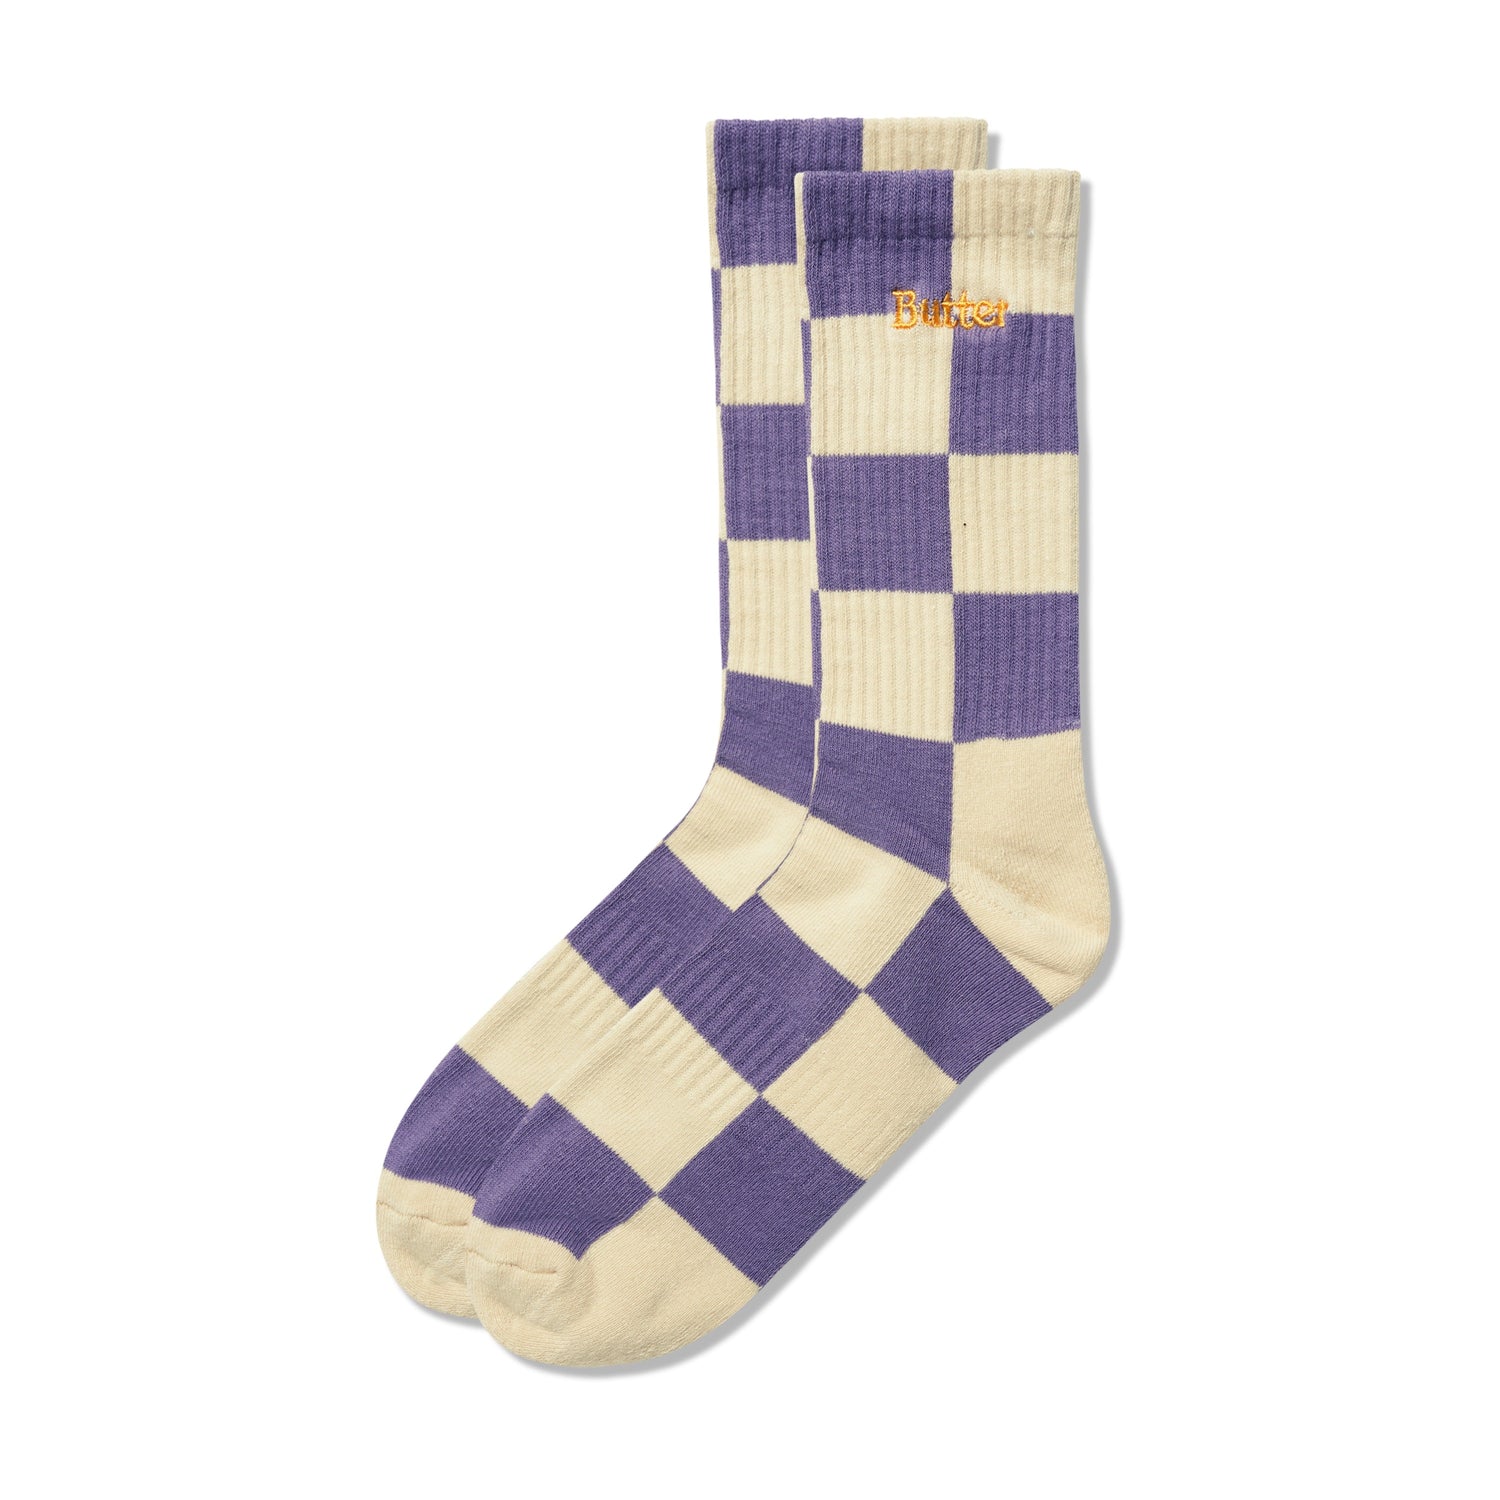 Checkered Socks, Eggplant / Tan